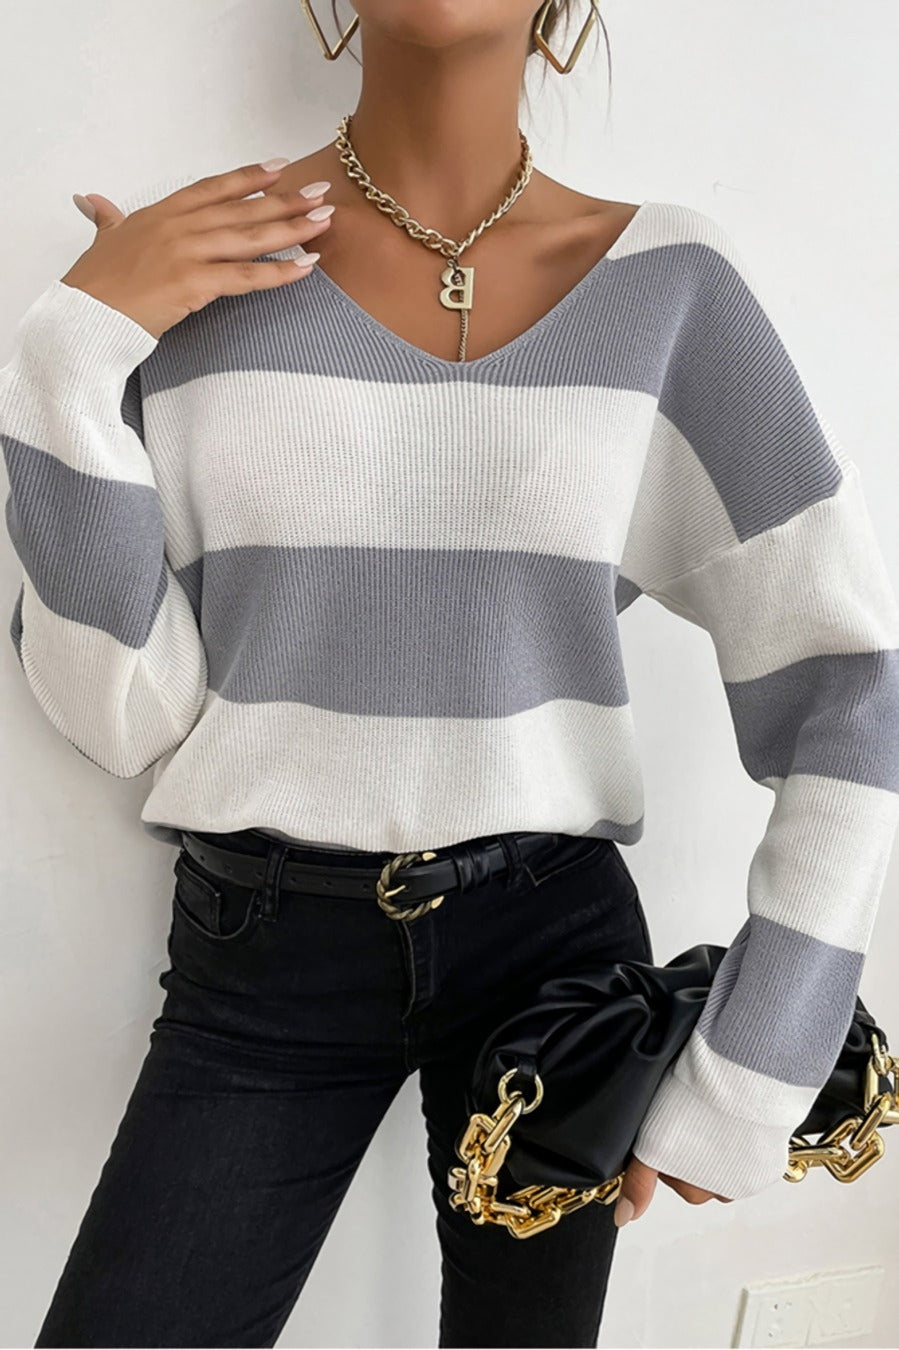 Slight Stretch Stripe Sweater